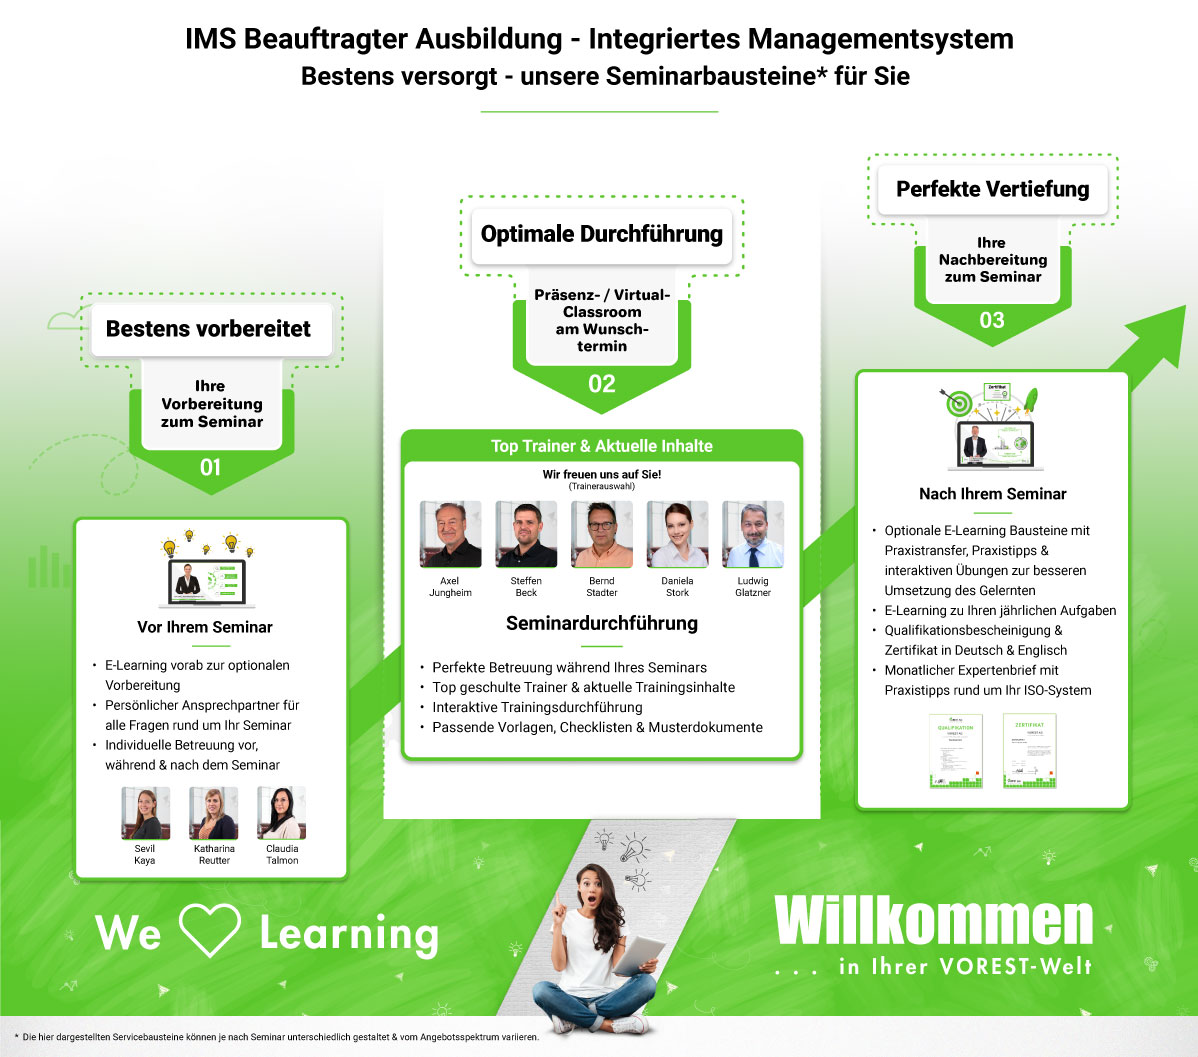 IMS Beauftragter Ausbildung - Integriertes Managementsystem